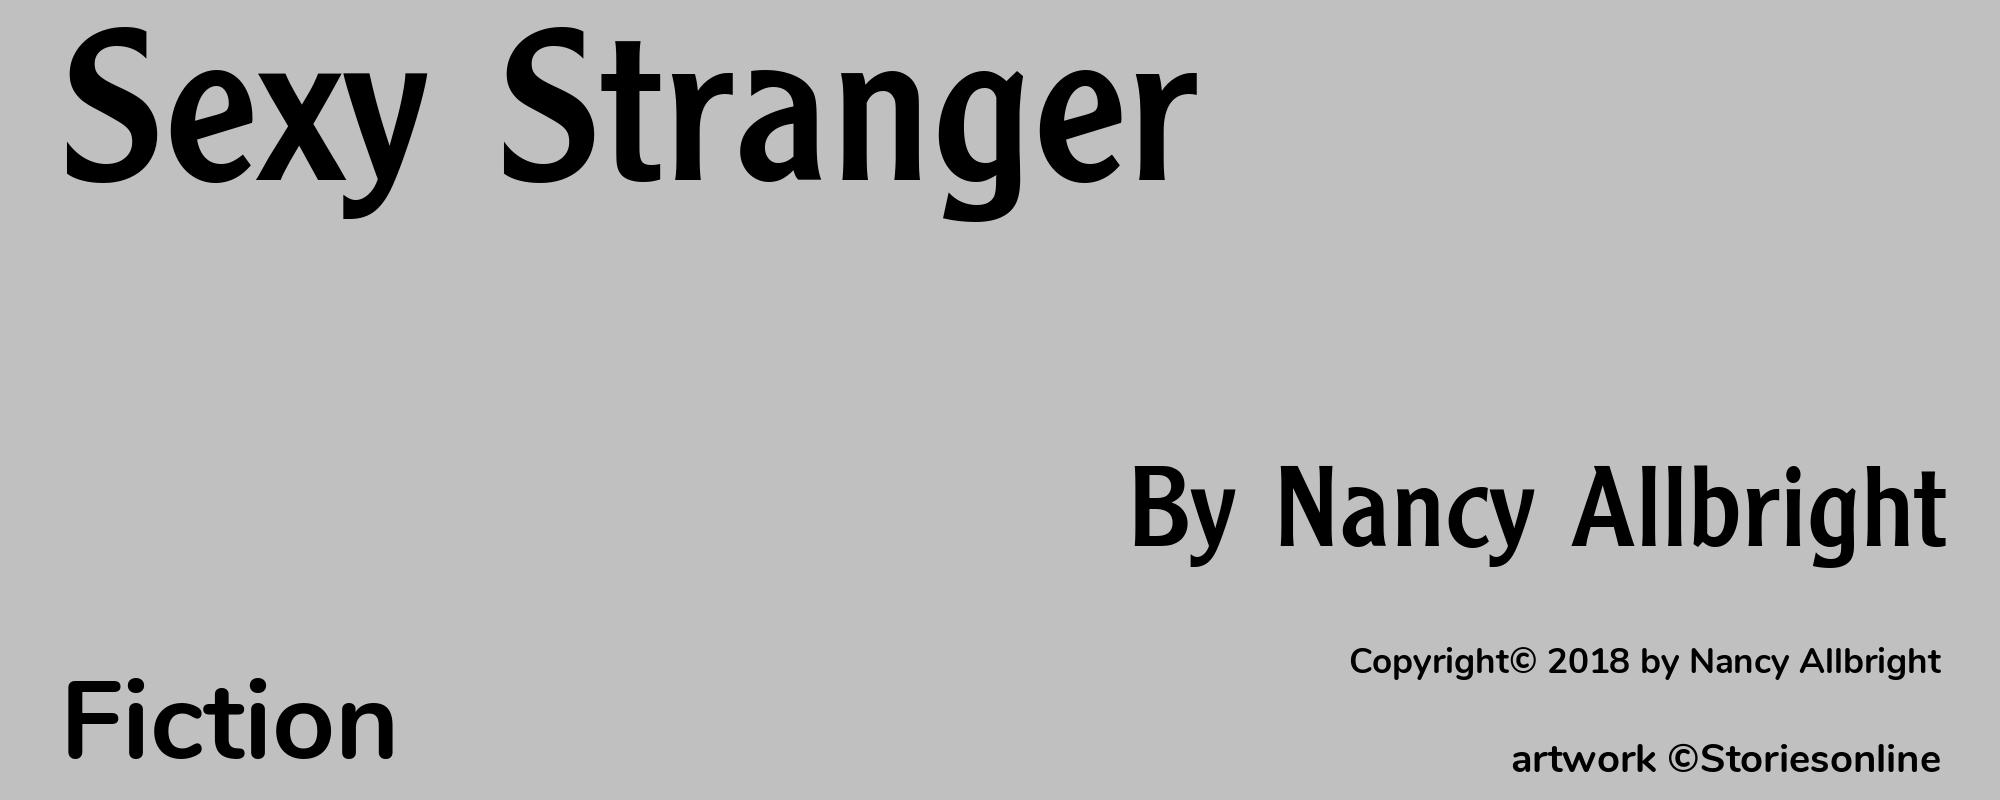 Sexy Stranger - Cover